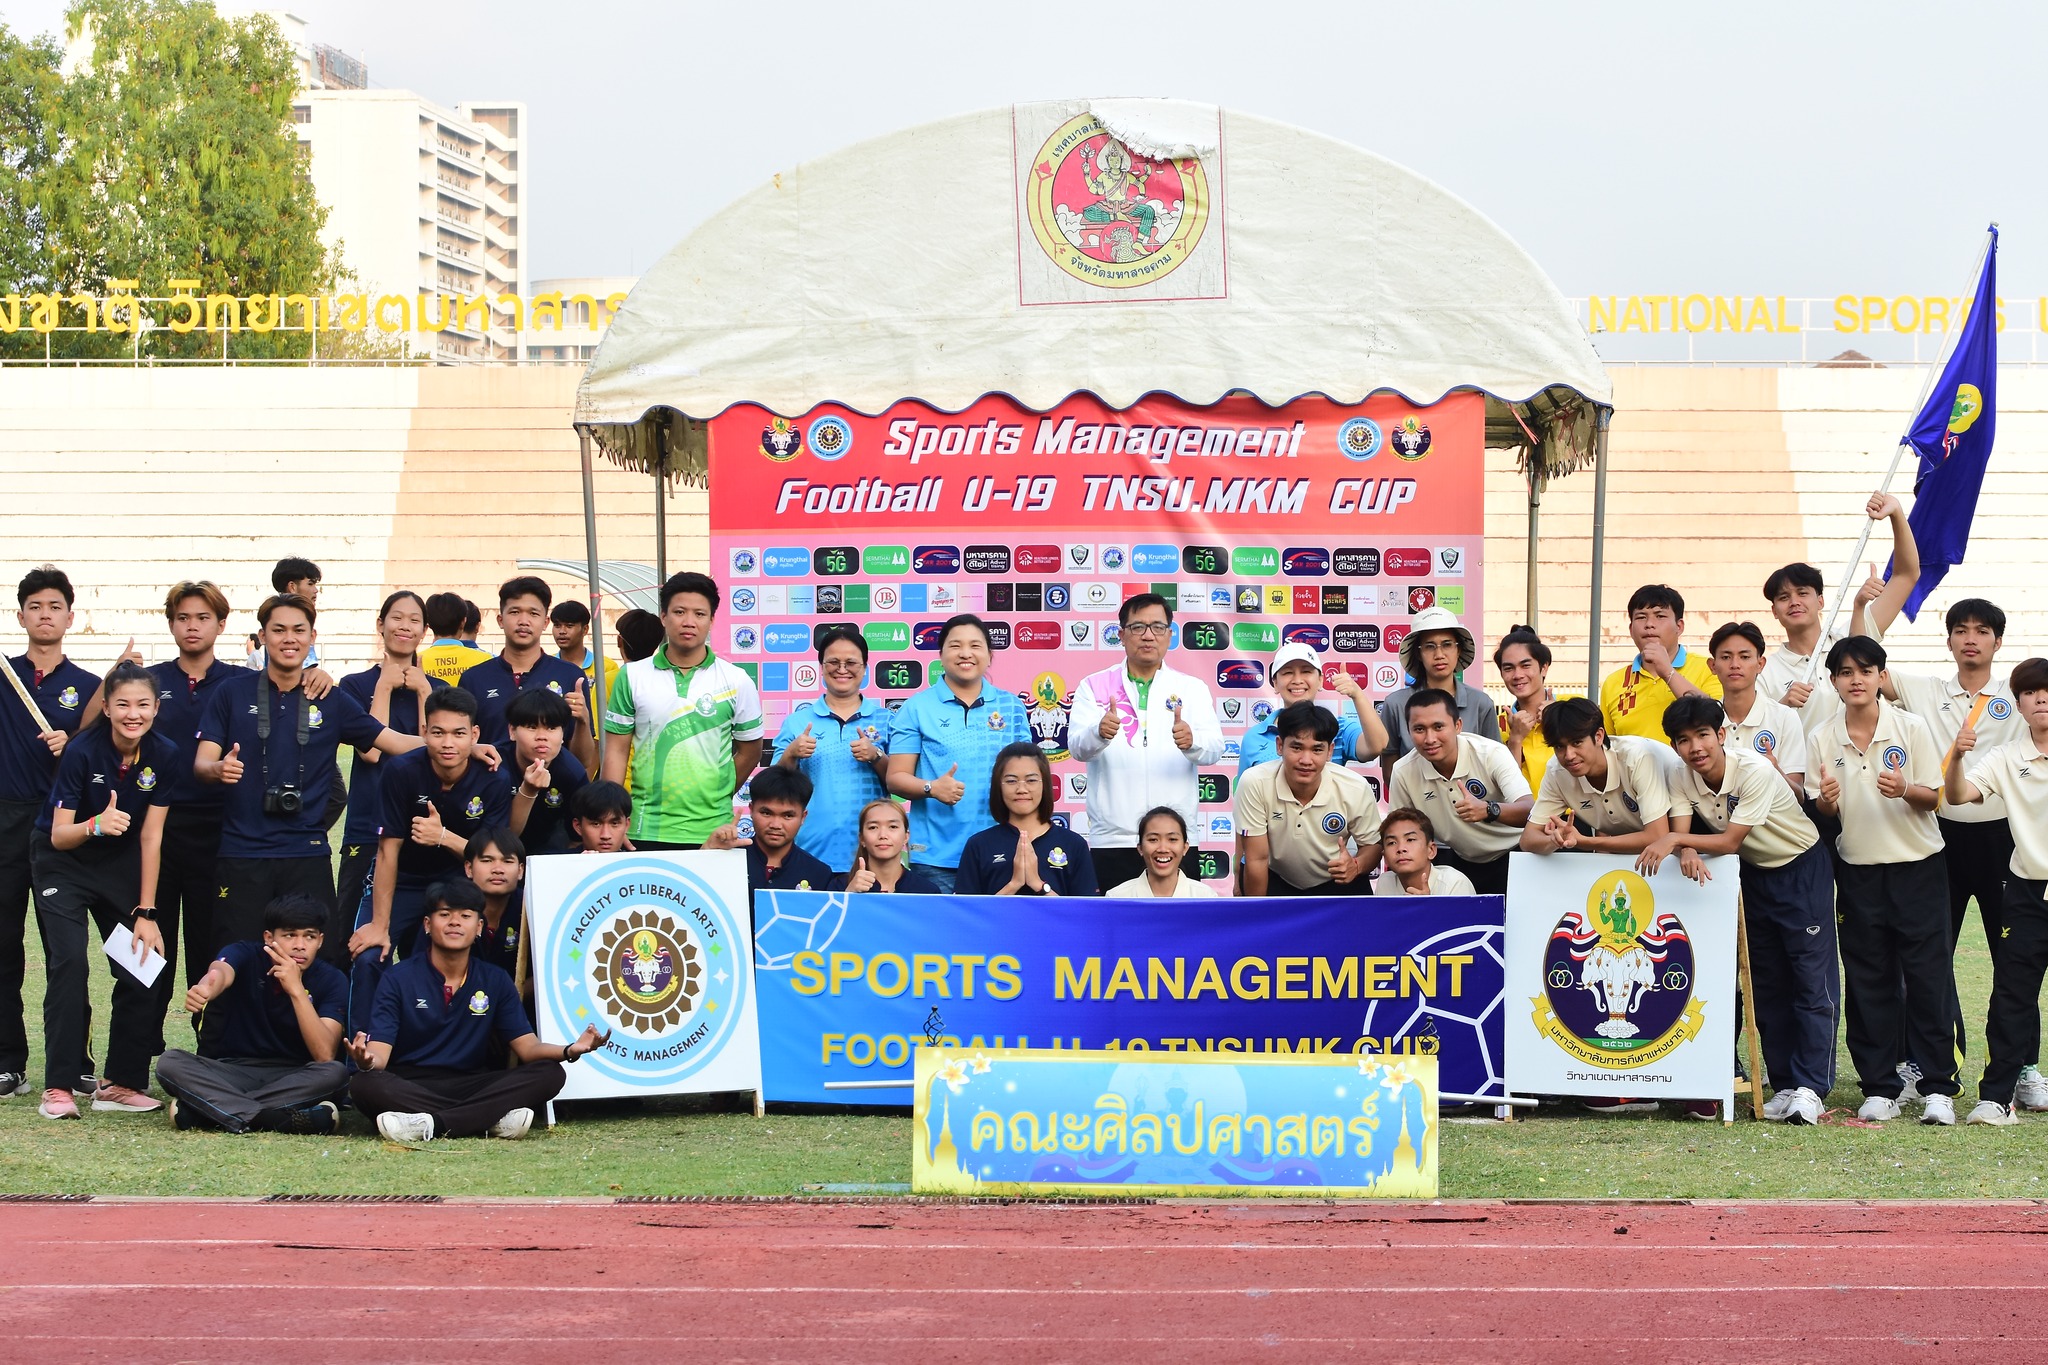 Sports Management Football U19 TNSUMK Cup